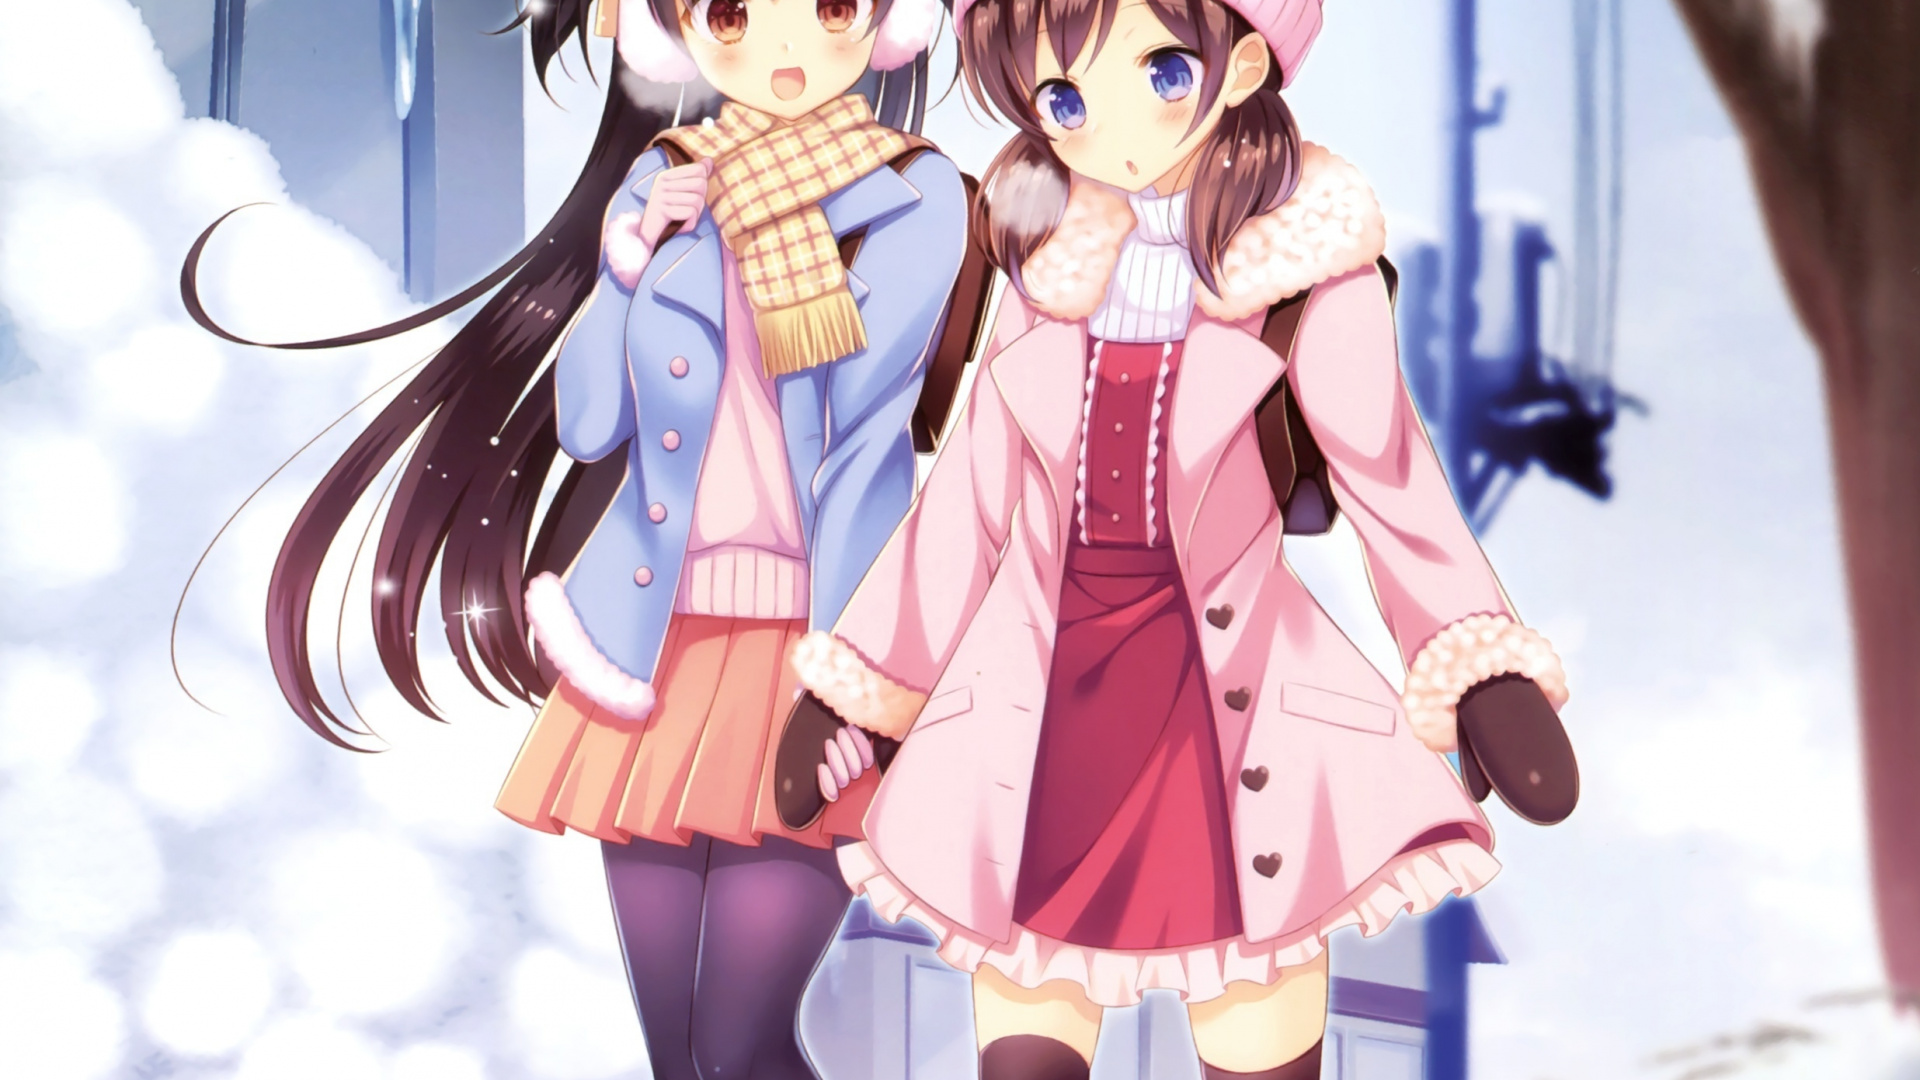 Winter Outdoor Girls Anime Friends Wallpaper Girl Image